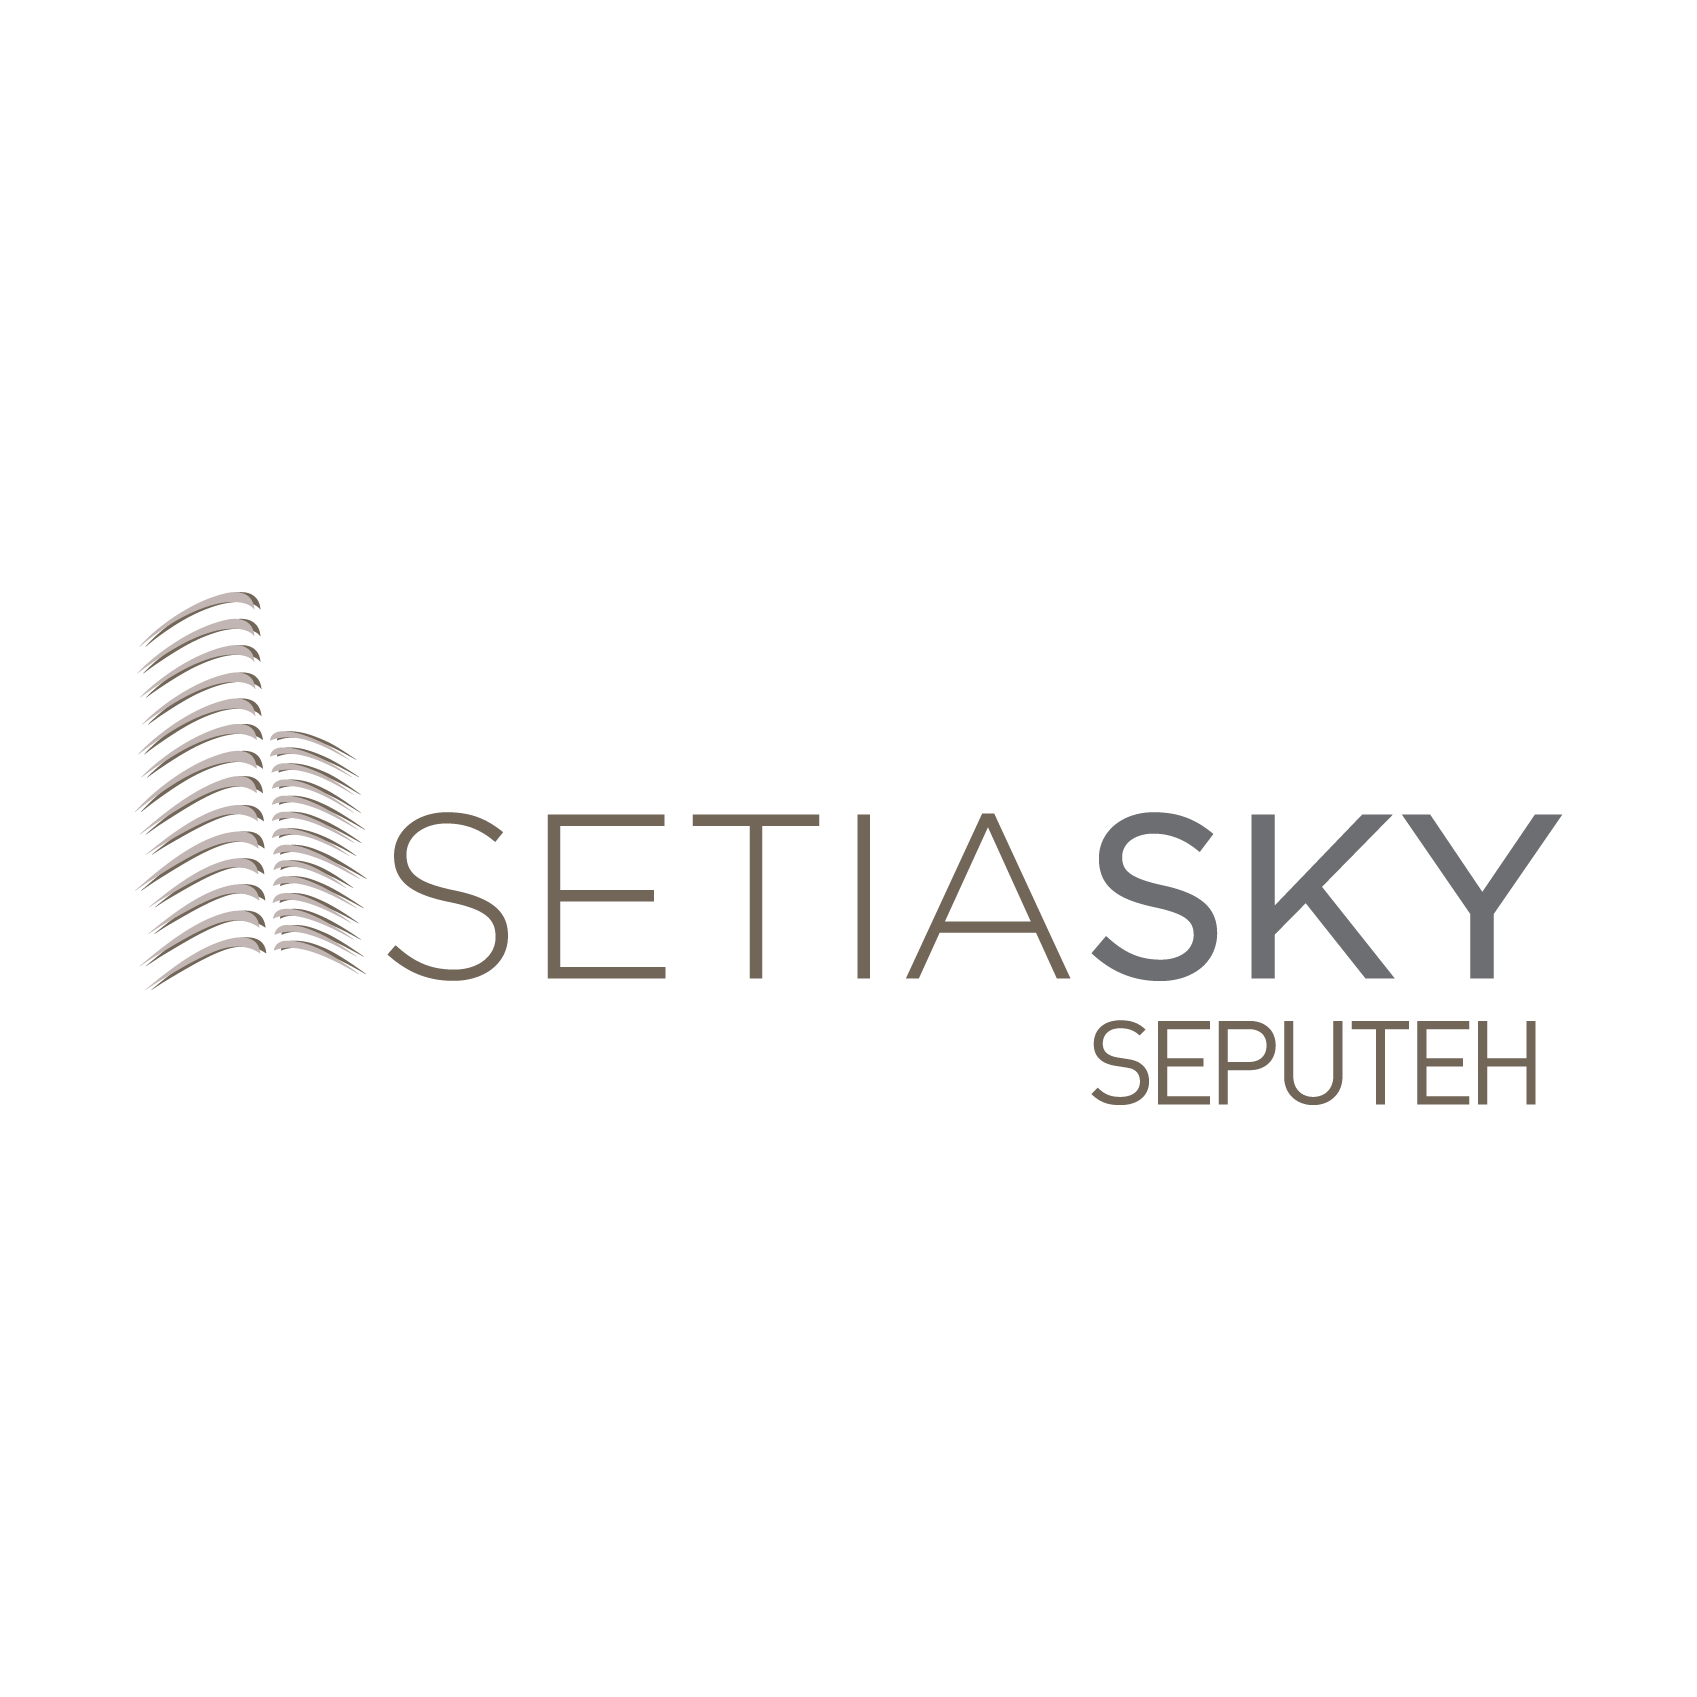 Setia Sky Seputeh - Prestige Realty